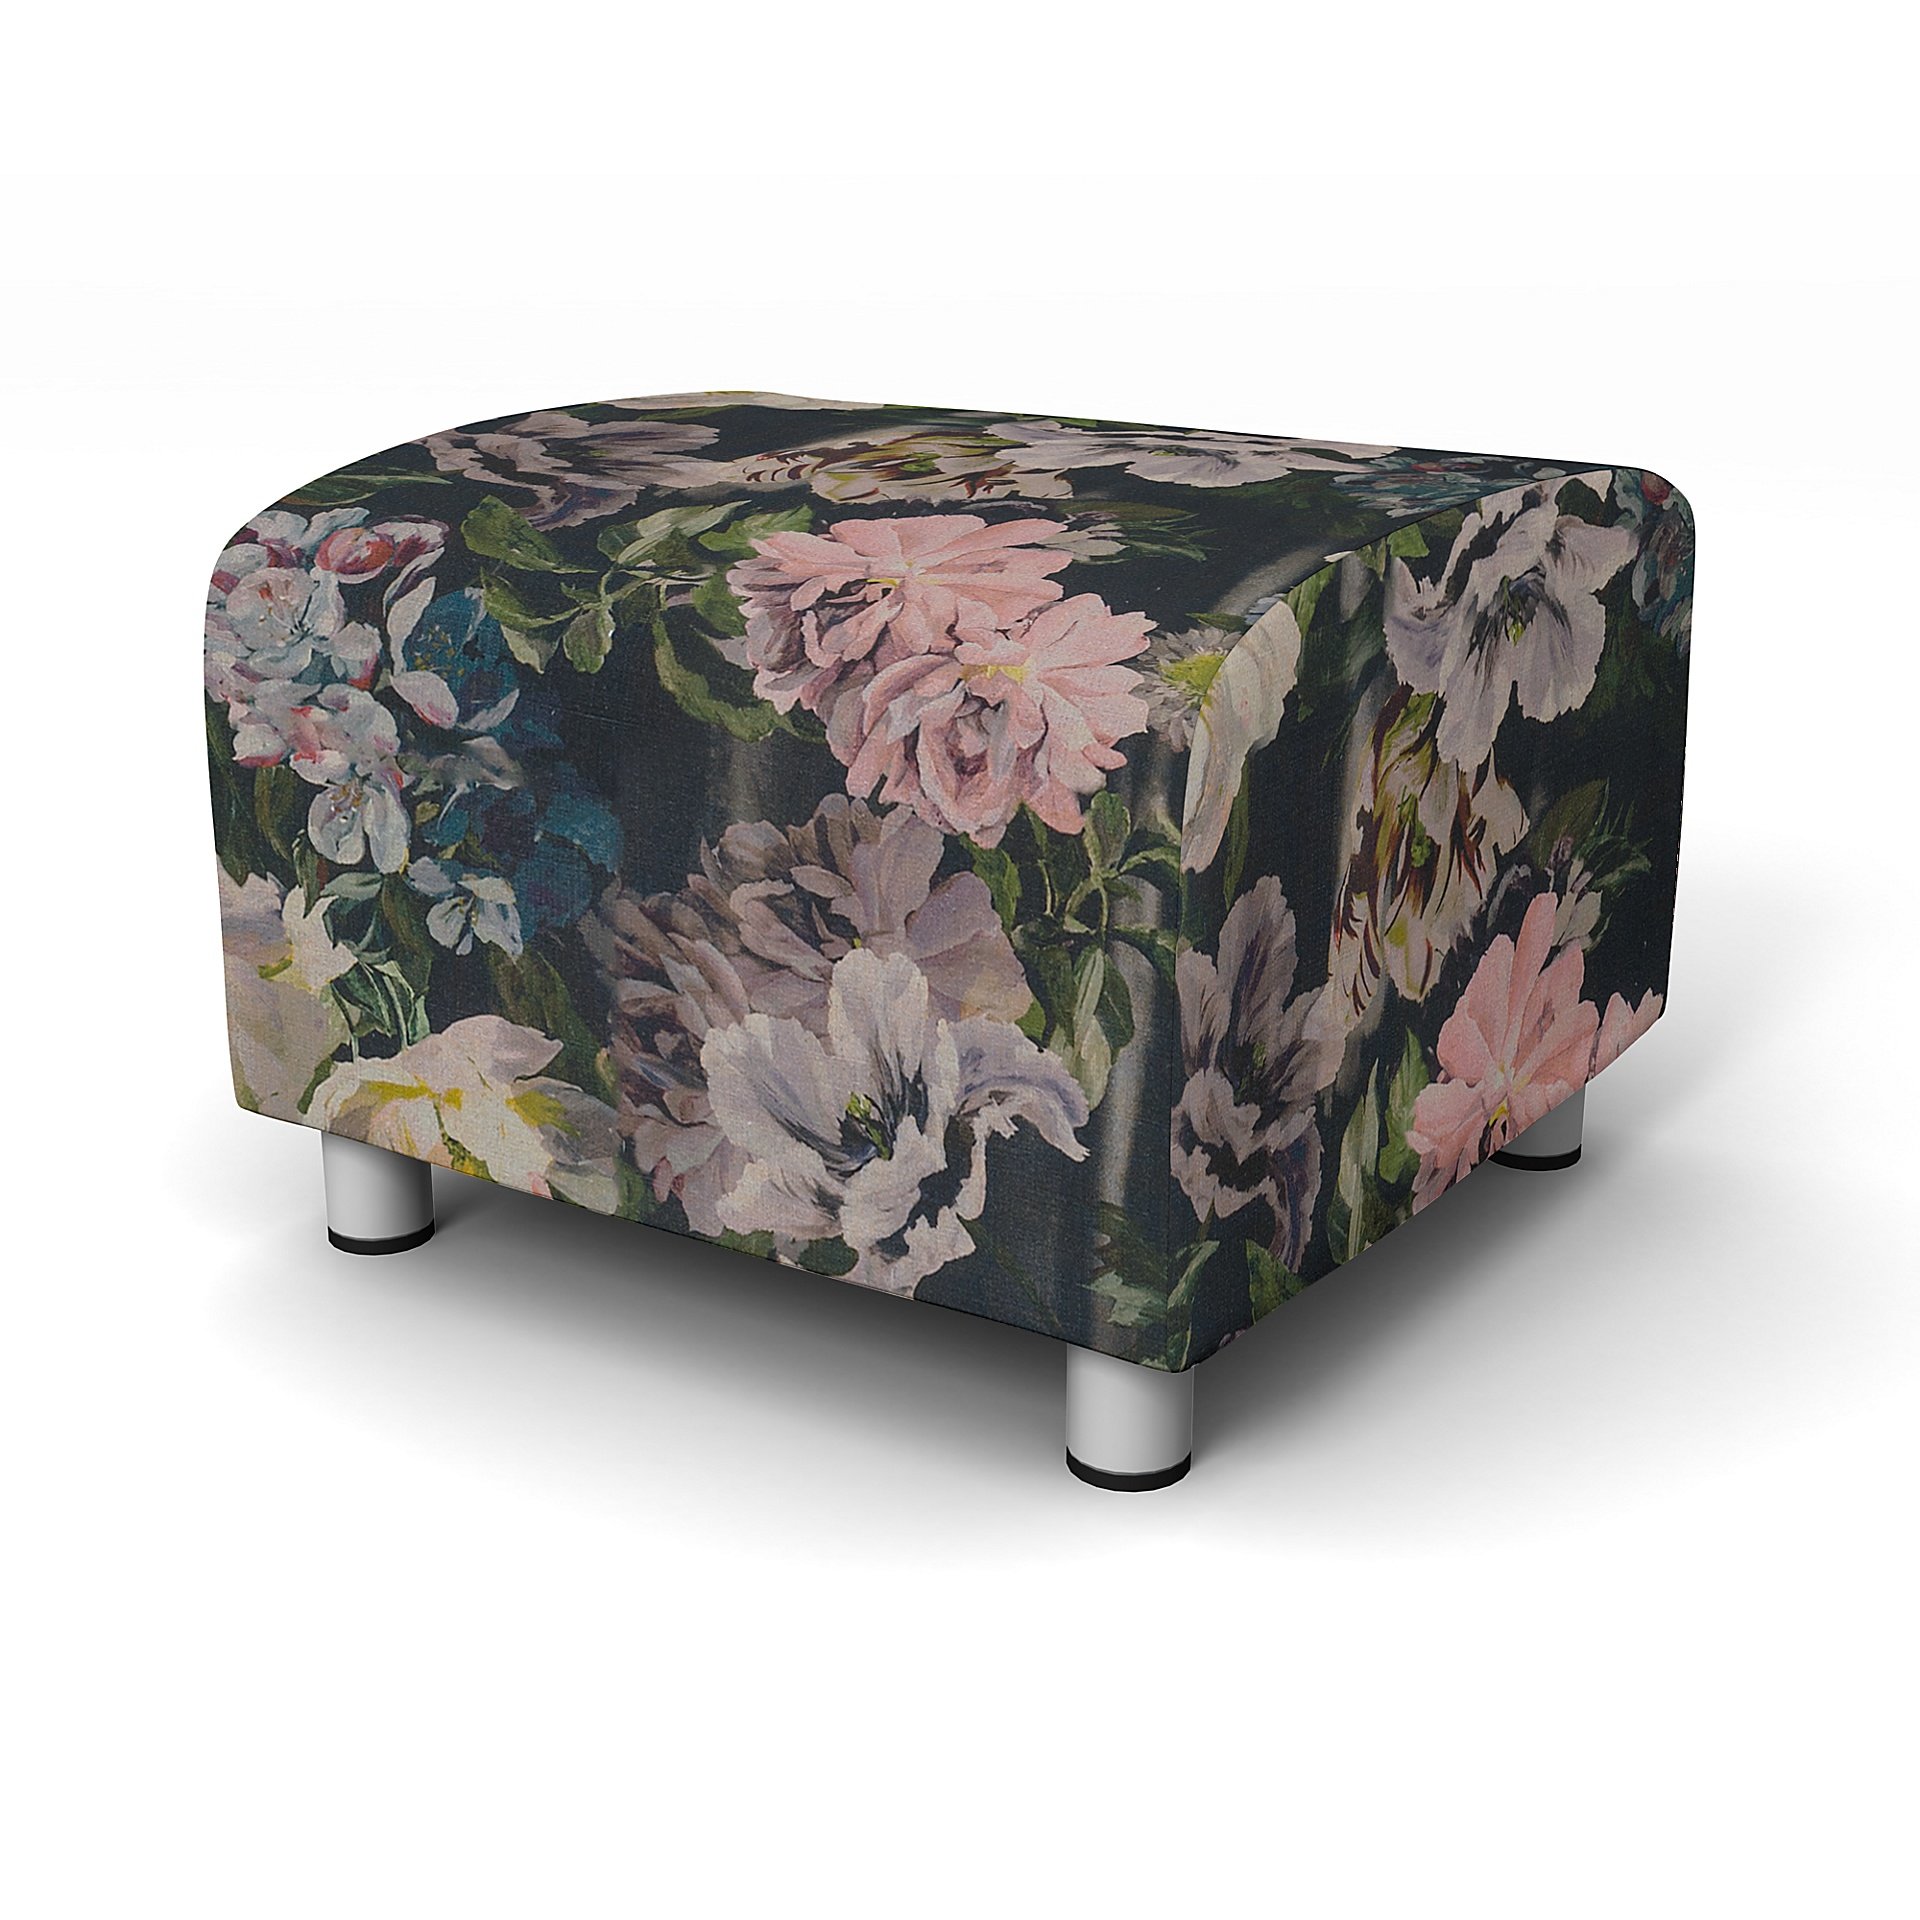 IKEA - Klippan Footstool Cover, Delft Flower - Graphite, Linen - Bemz